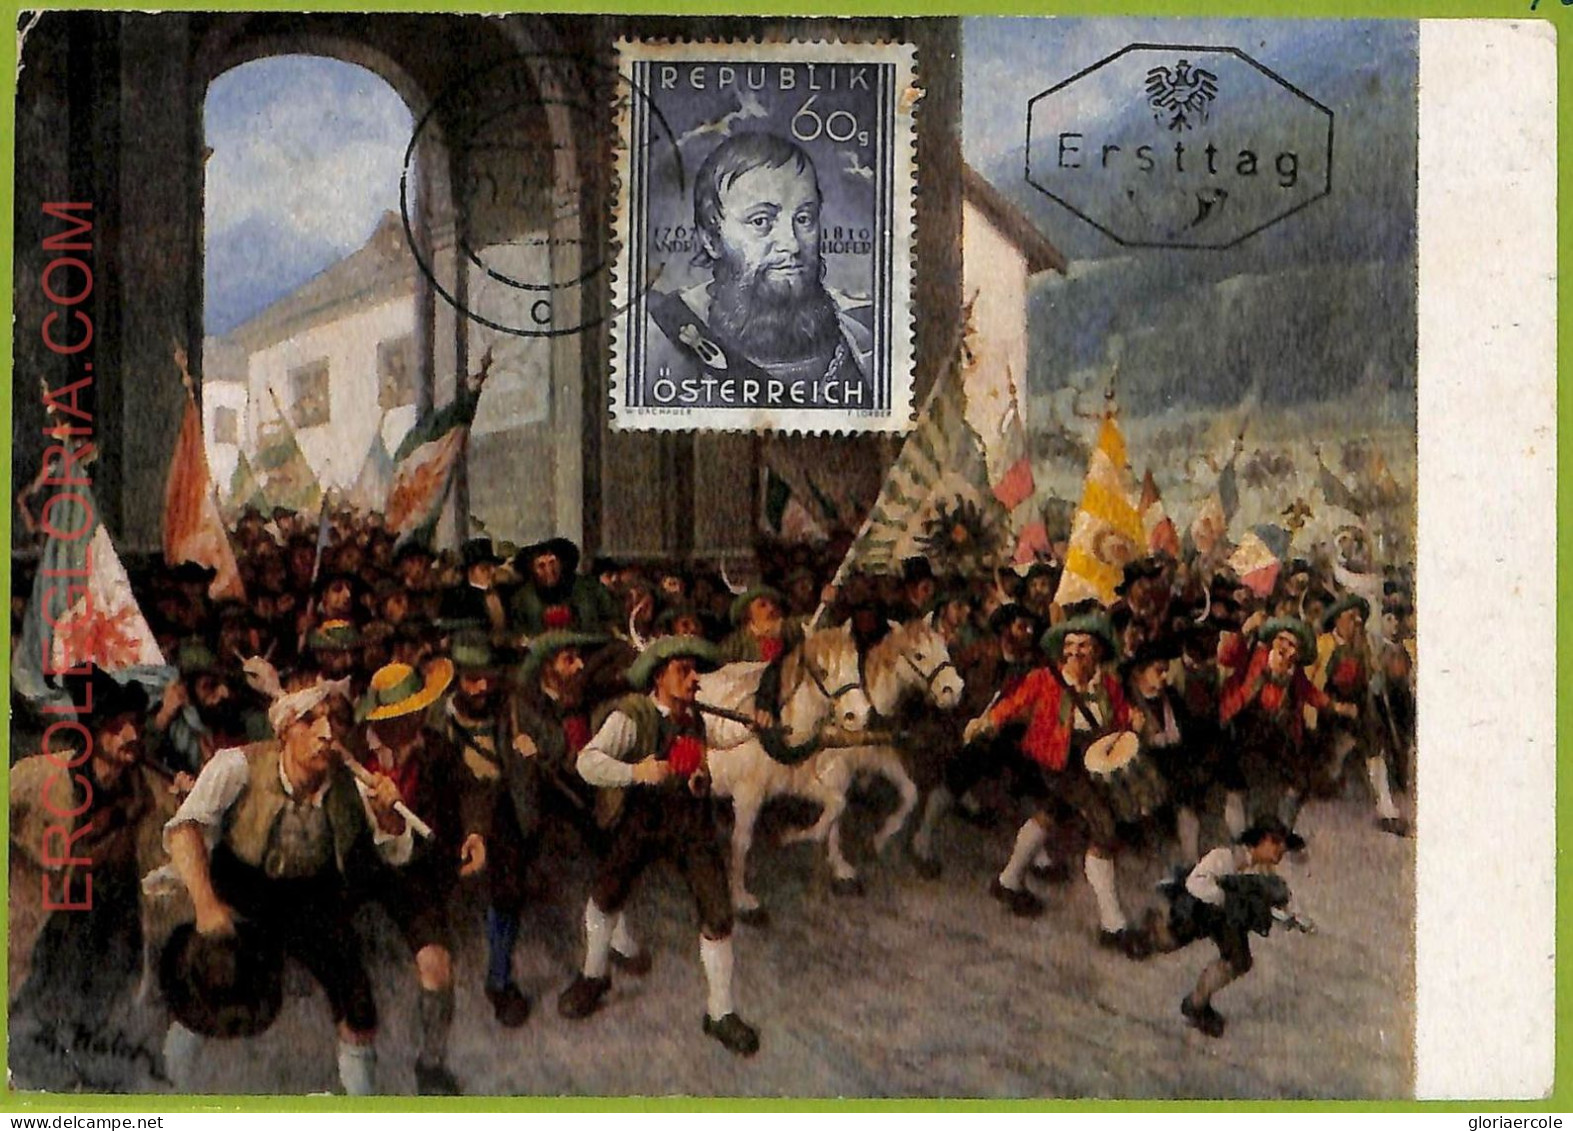 Ad3305 - AUSTRIA - Postal History - MAXIMUM CARD - 1959 - SALZBURG - Cartes-Maximum (CM)